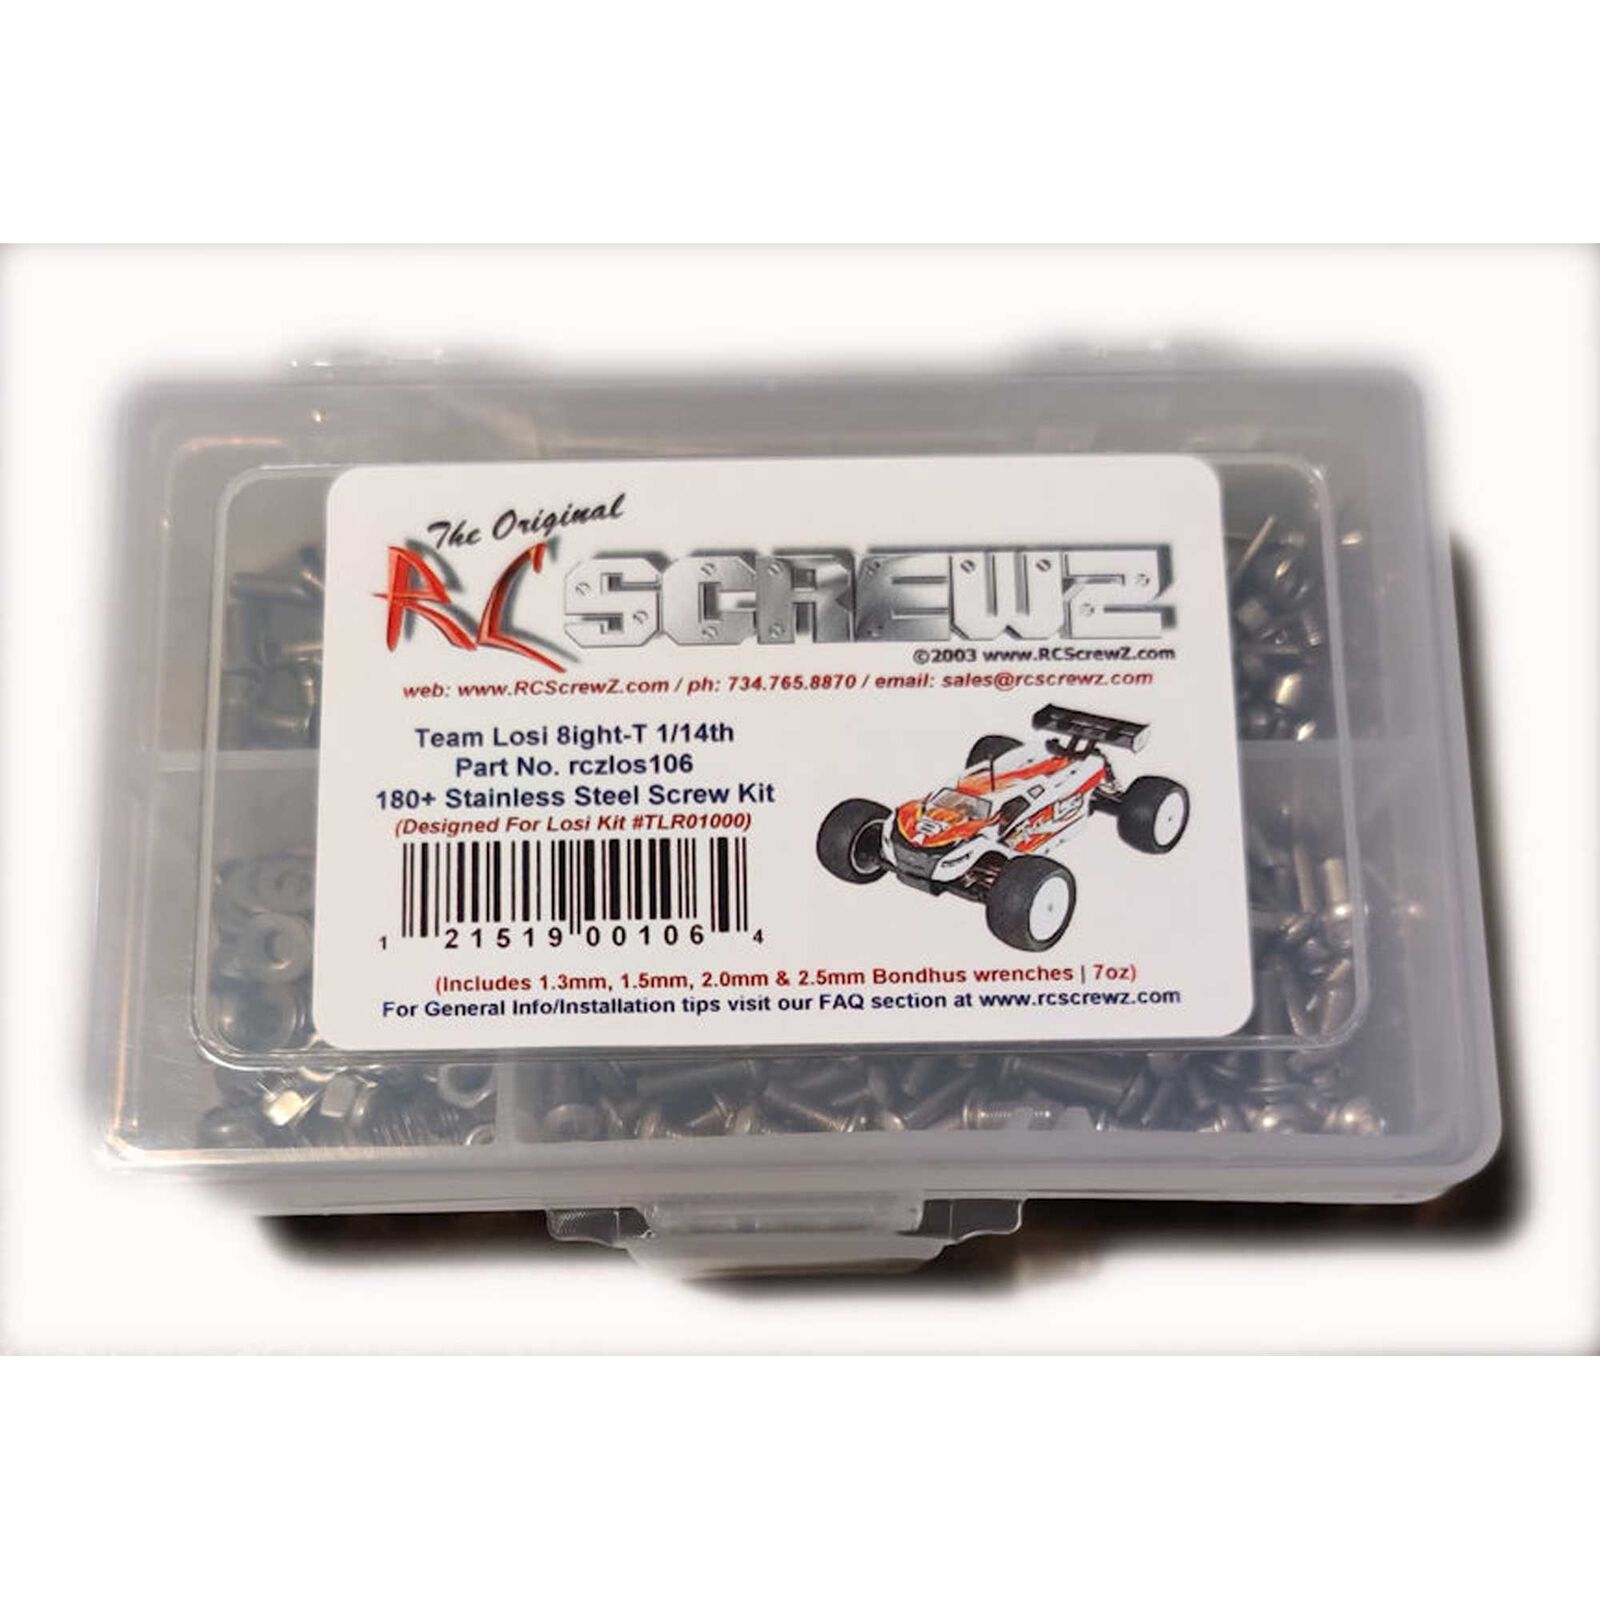 Stainless Screw Kit: Losi Mini 8ight-T 1/14th